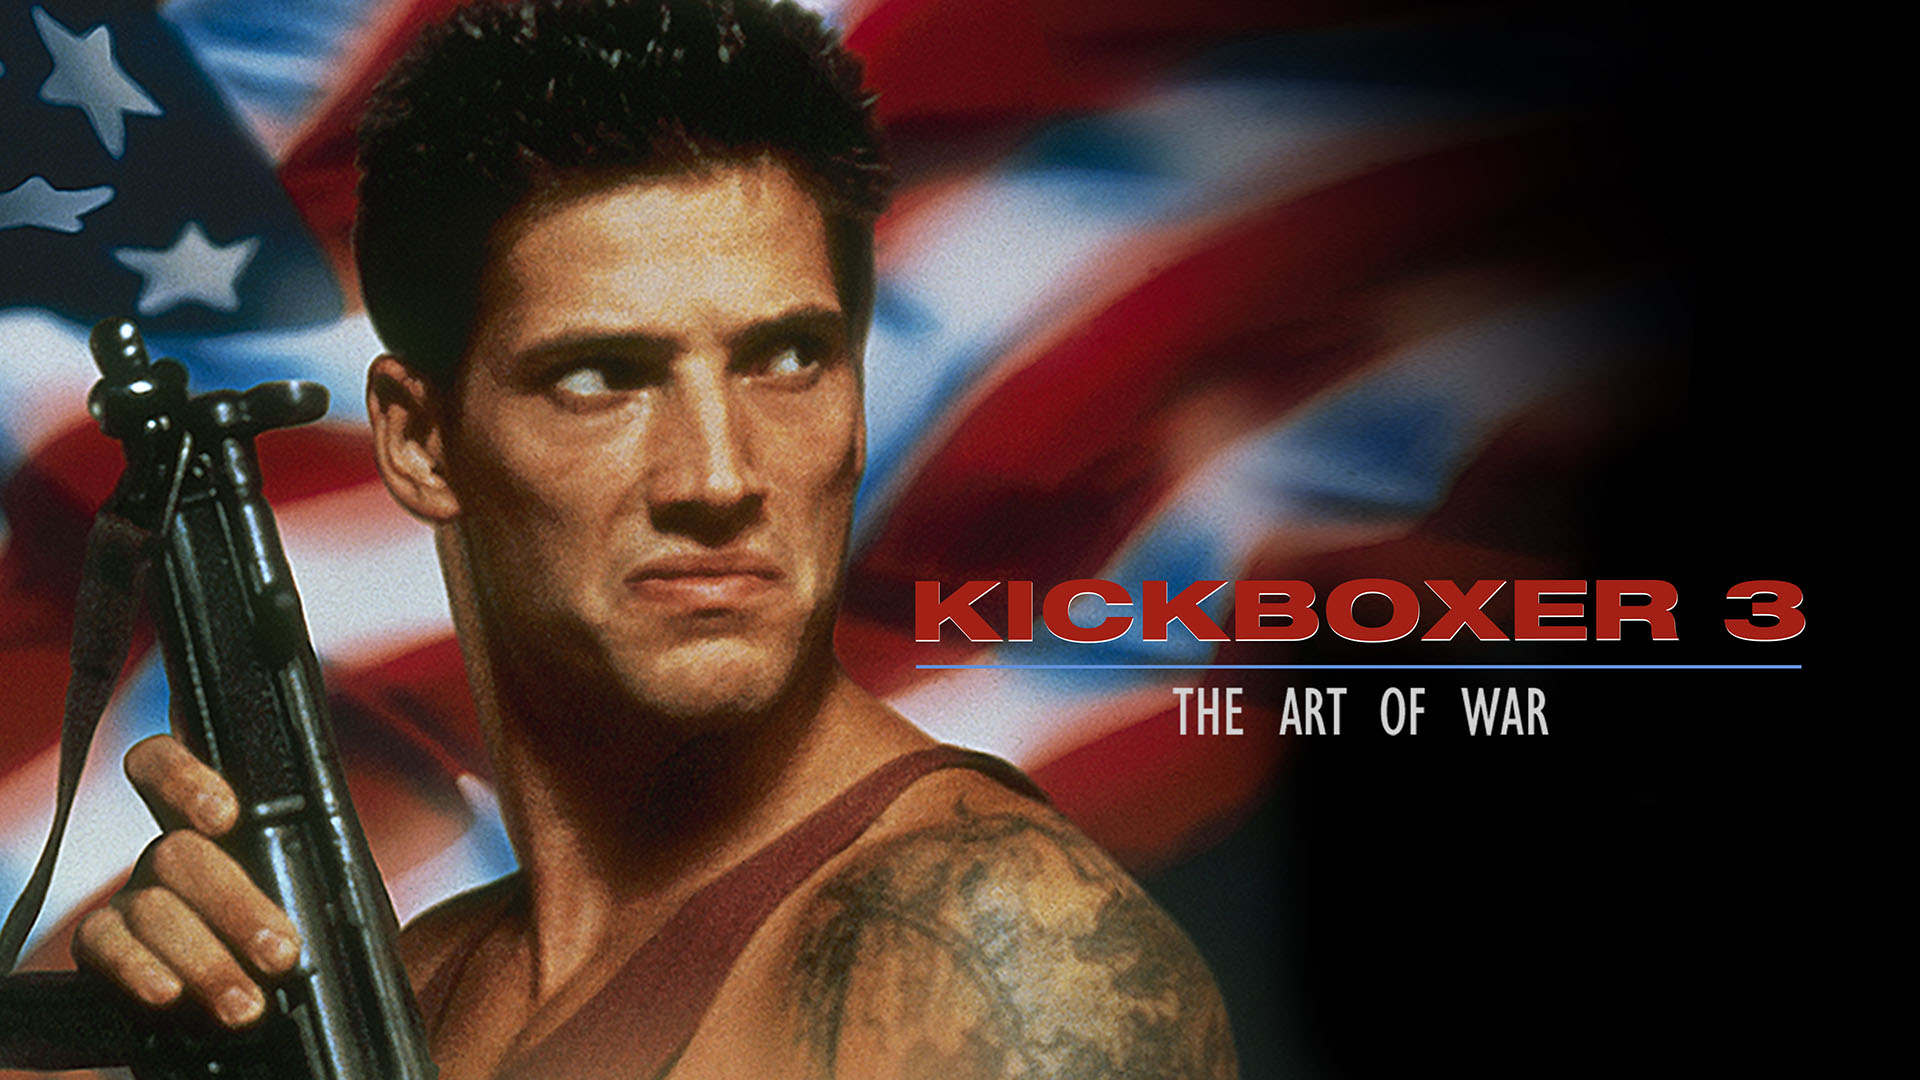 Watch Kickboxer 3: The Art of War Online | Stream Full Movies